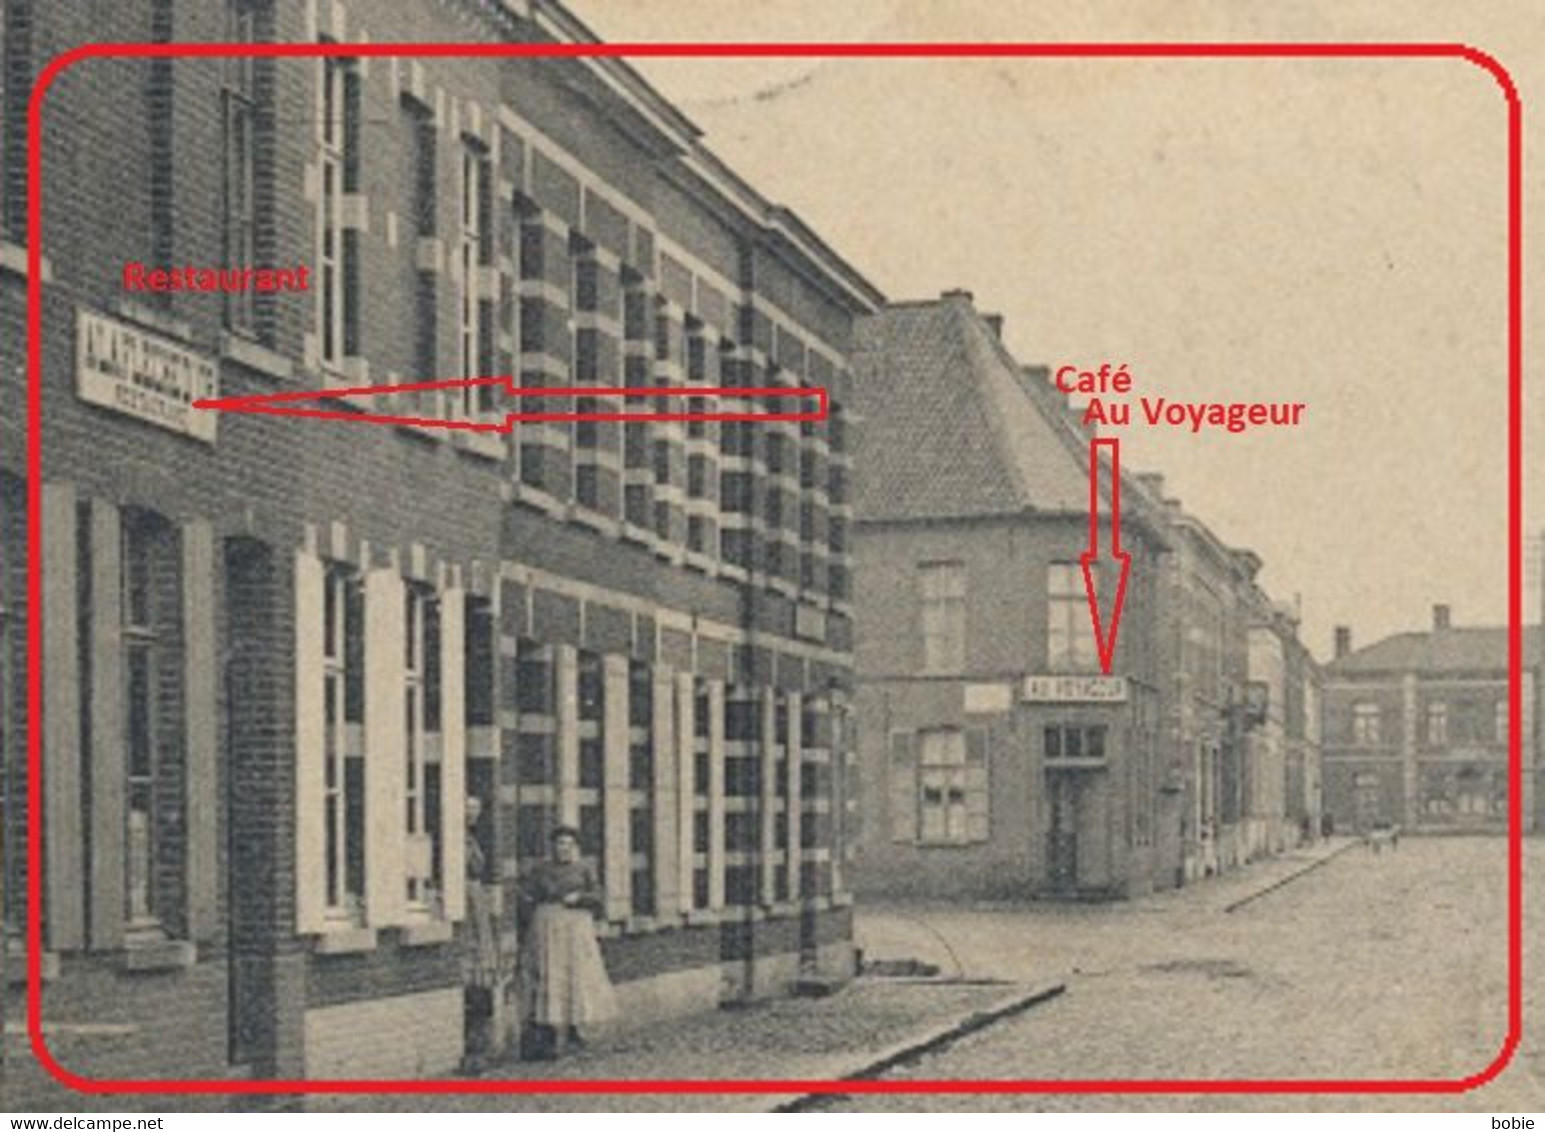 Avelghem - Avelgem Belgien : Statiestraat - Rue De La Station - Café Restaurant - Militär Stempel Landst." Krieg 1914-18 - Avelgem